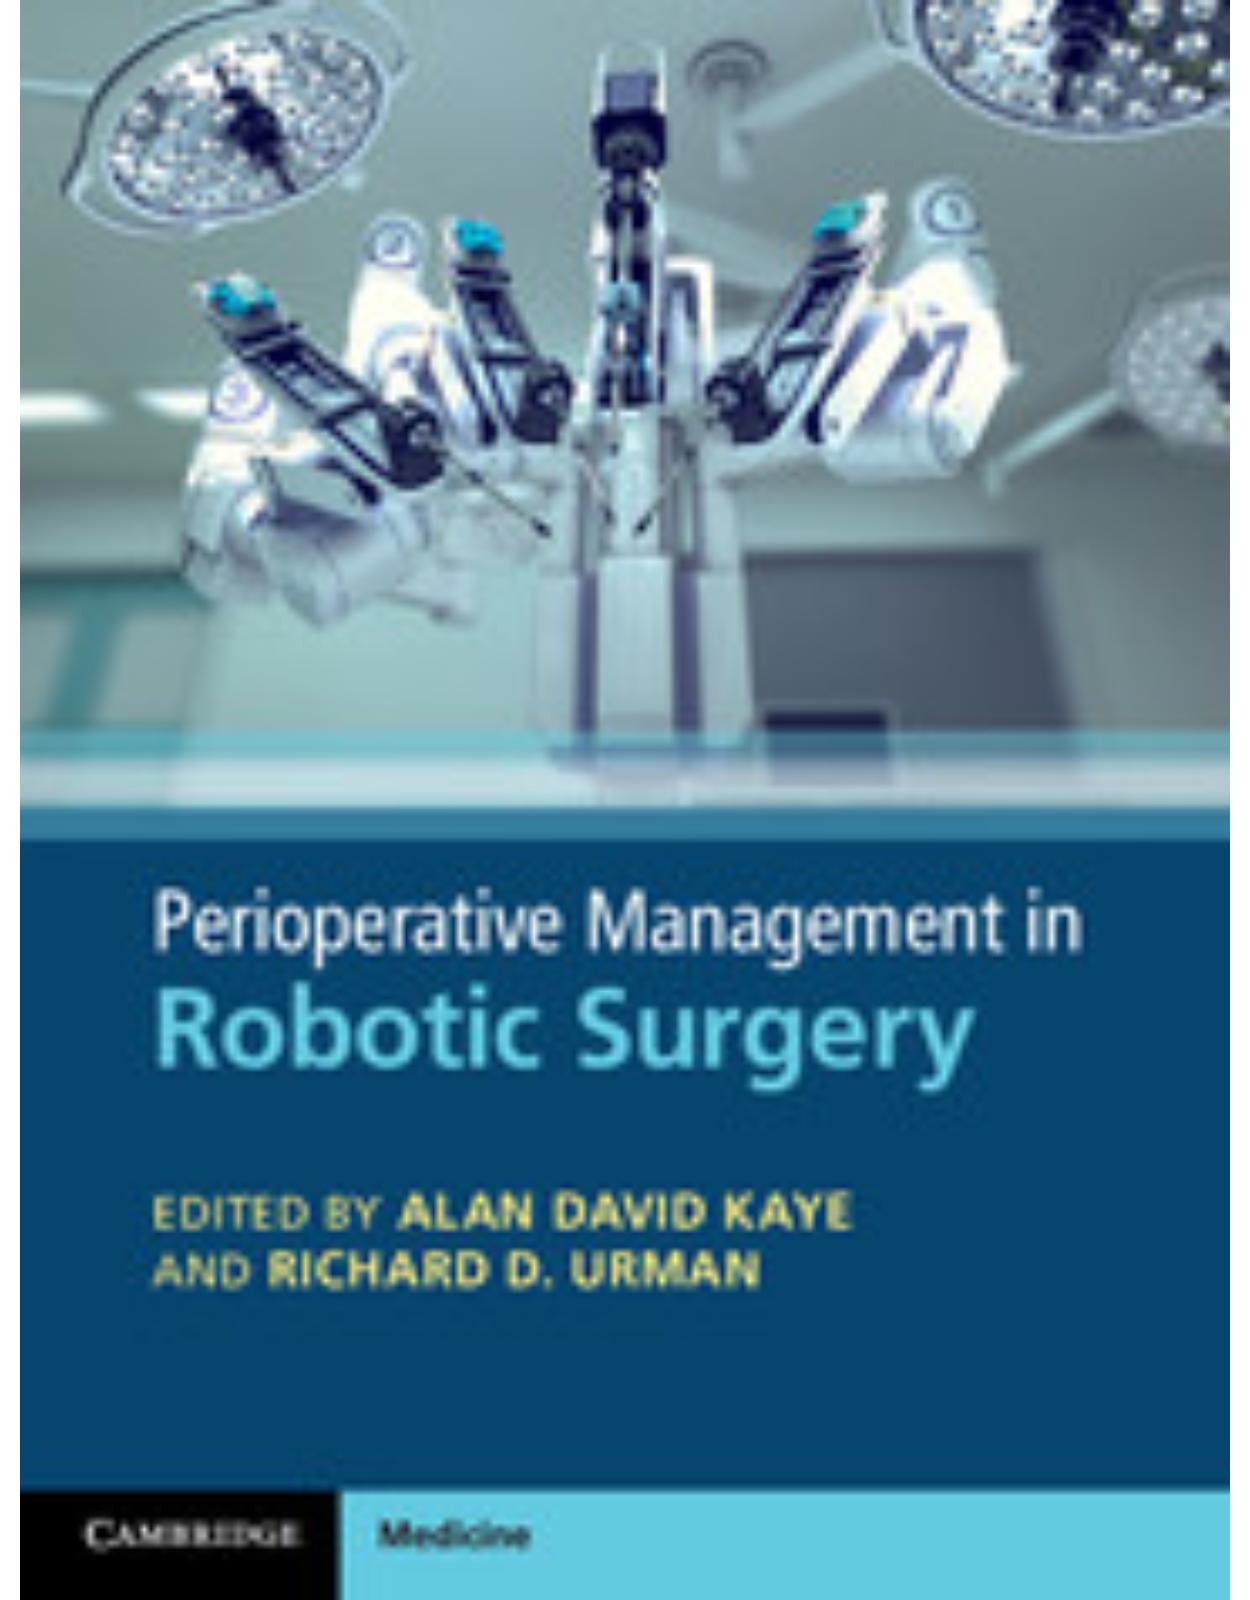  Perioperative Management in Robotic Surgery